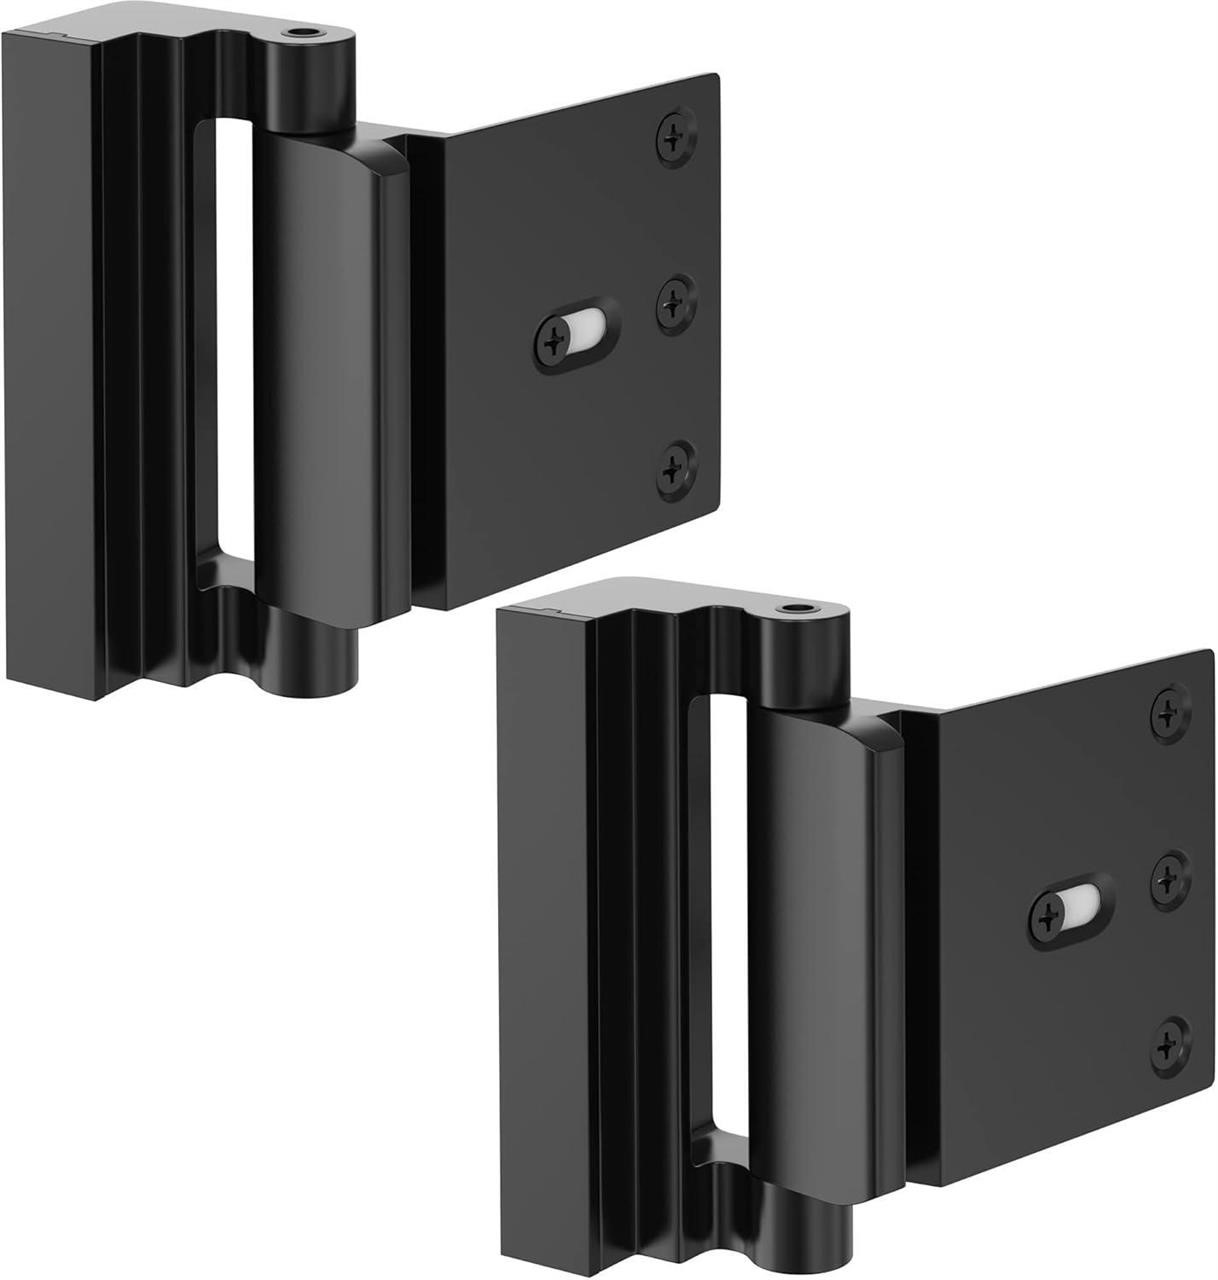 SEALED-Door Lock for Home Security x2